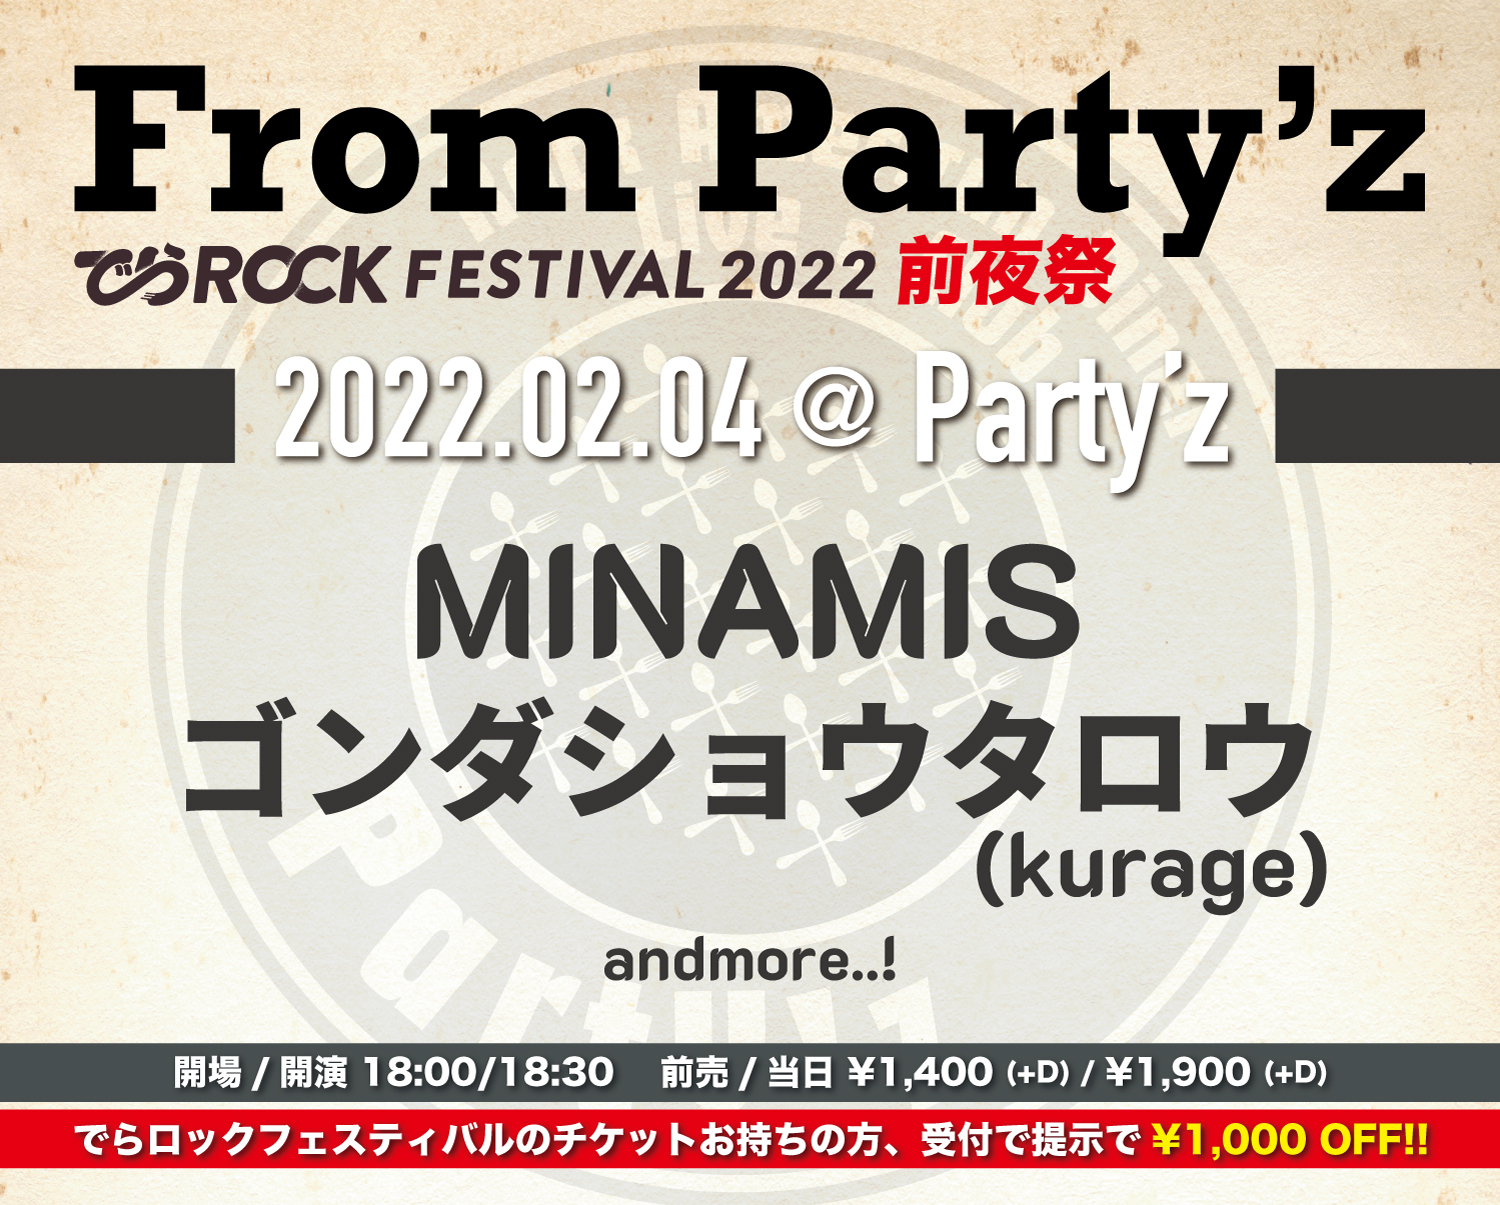 From Party'z ~でらロックフェスティバル2022 前夜祭~